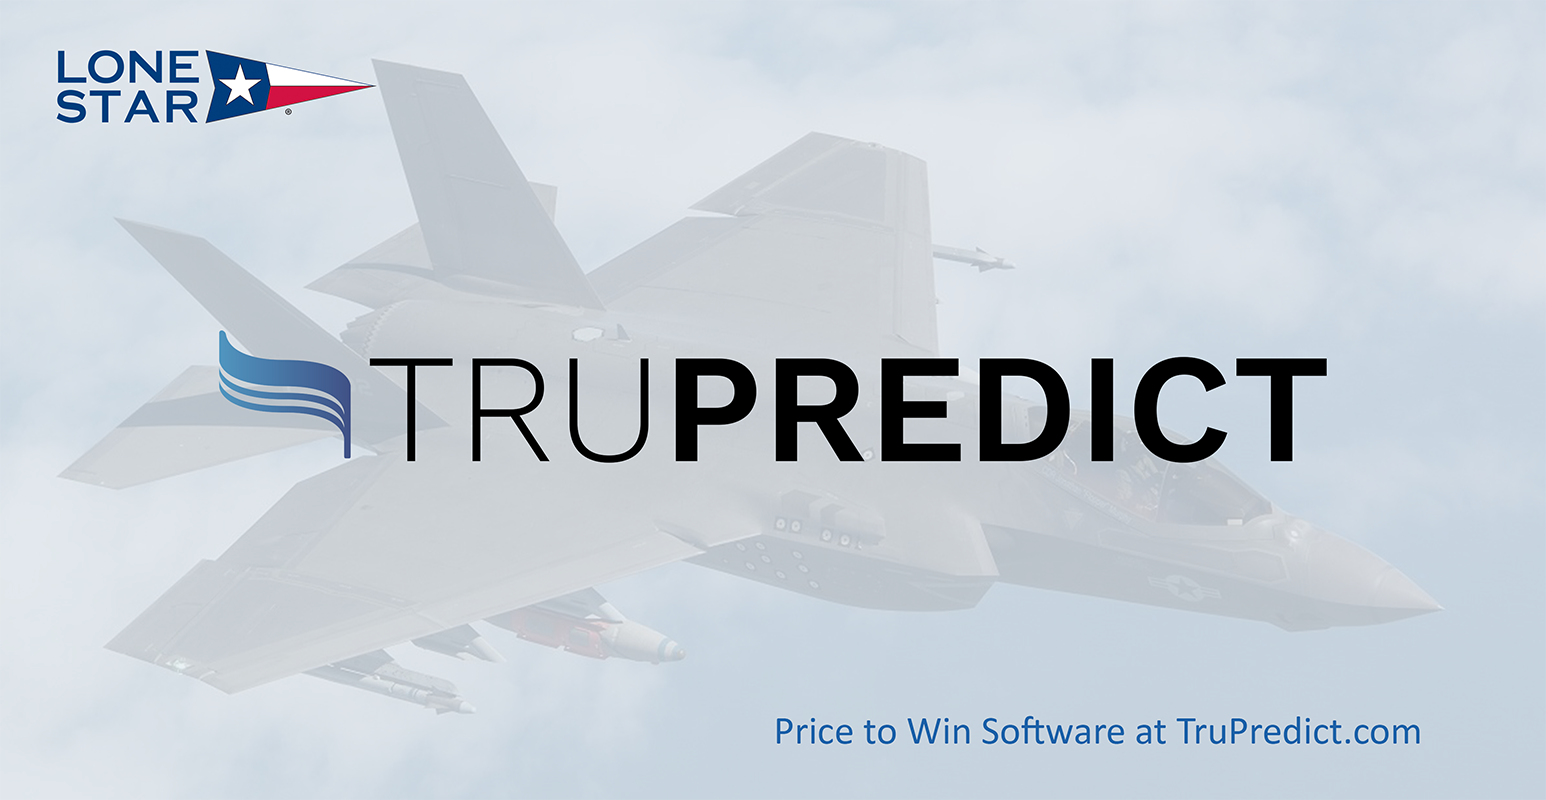 Price to win software - TruPredict